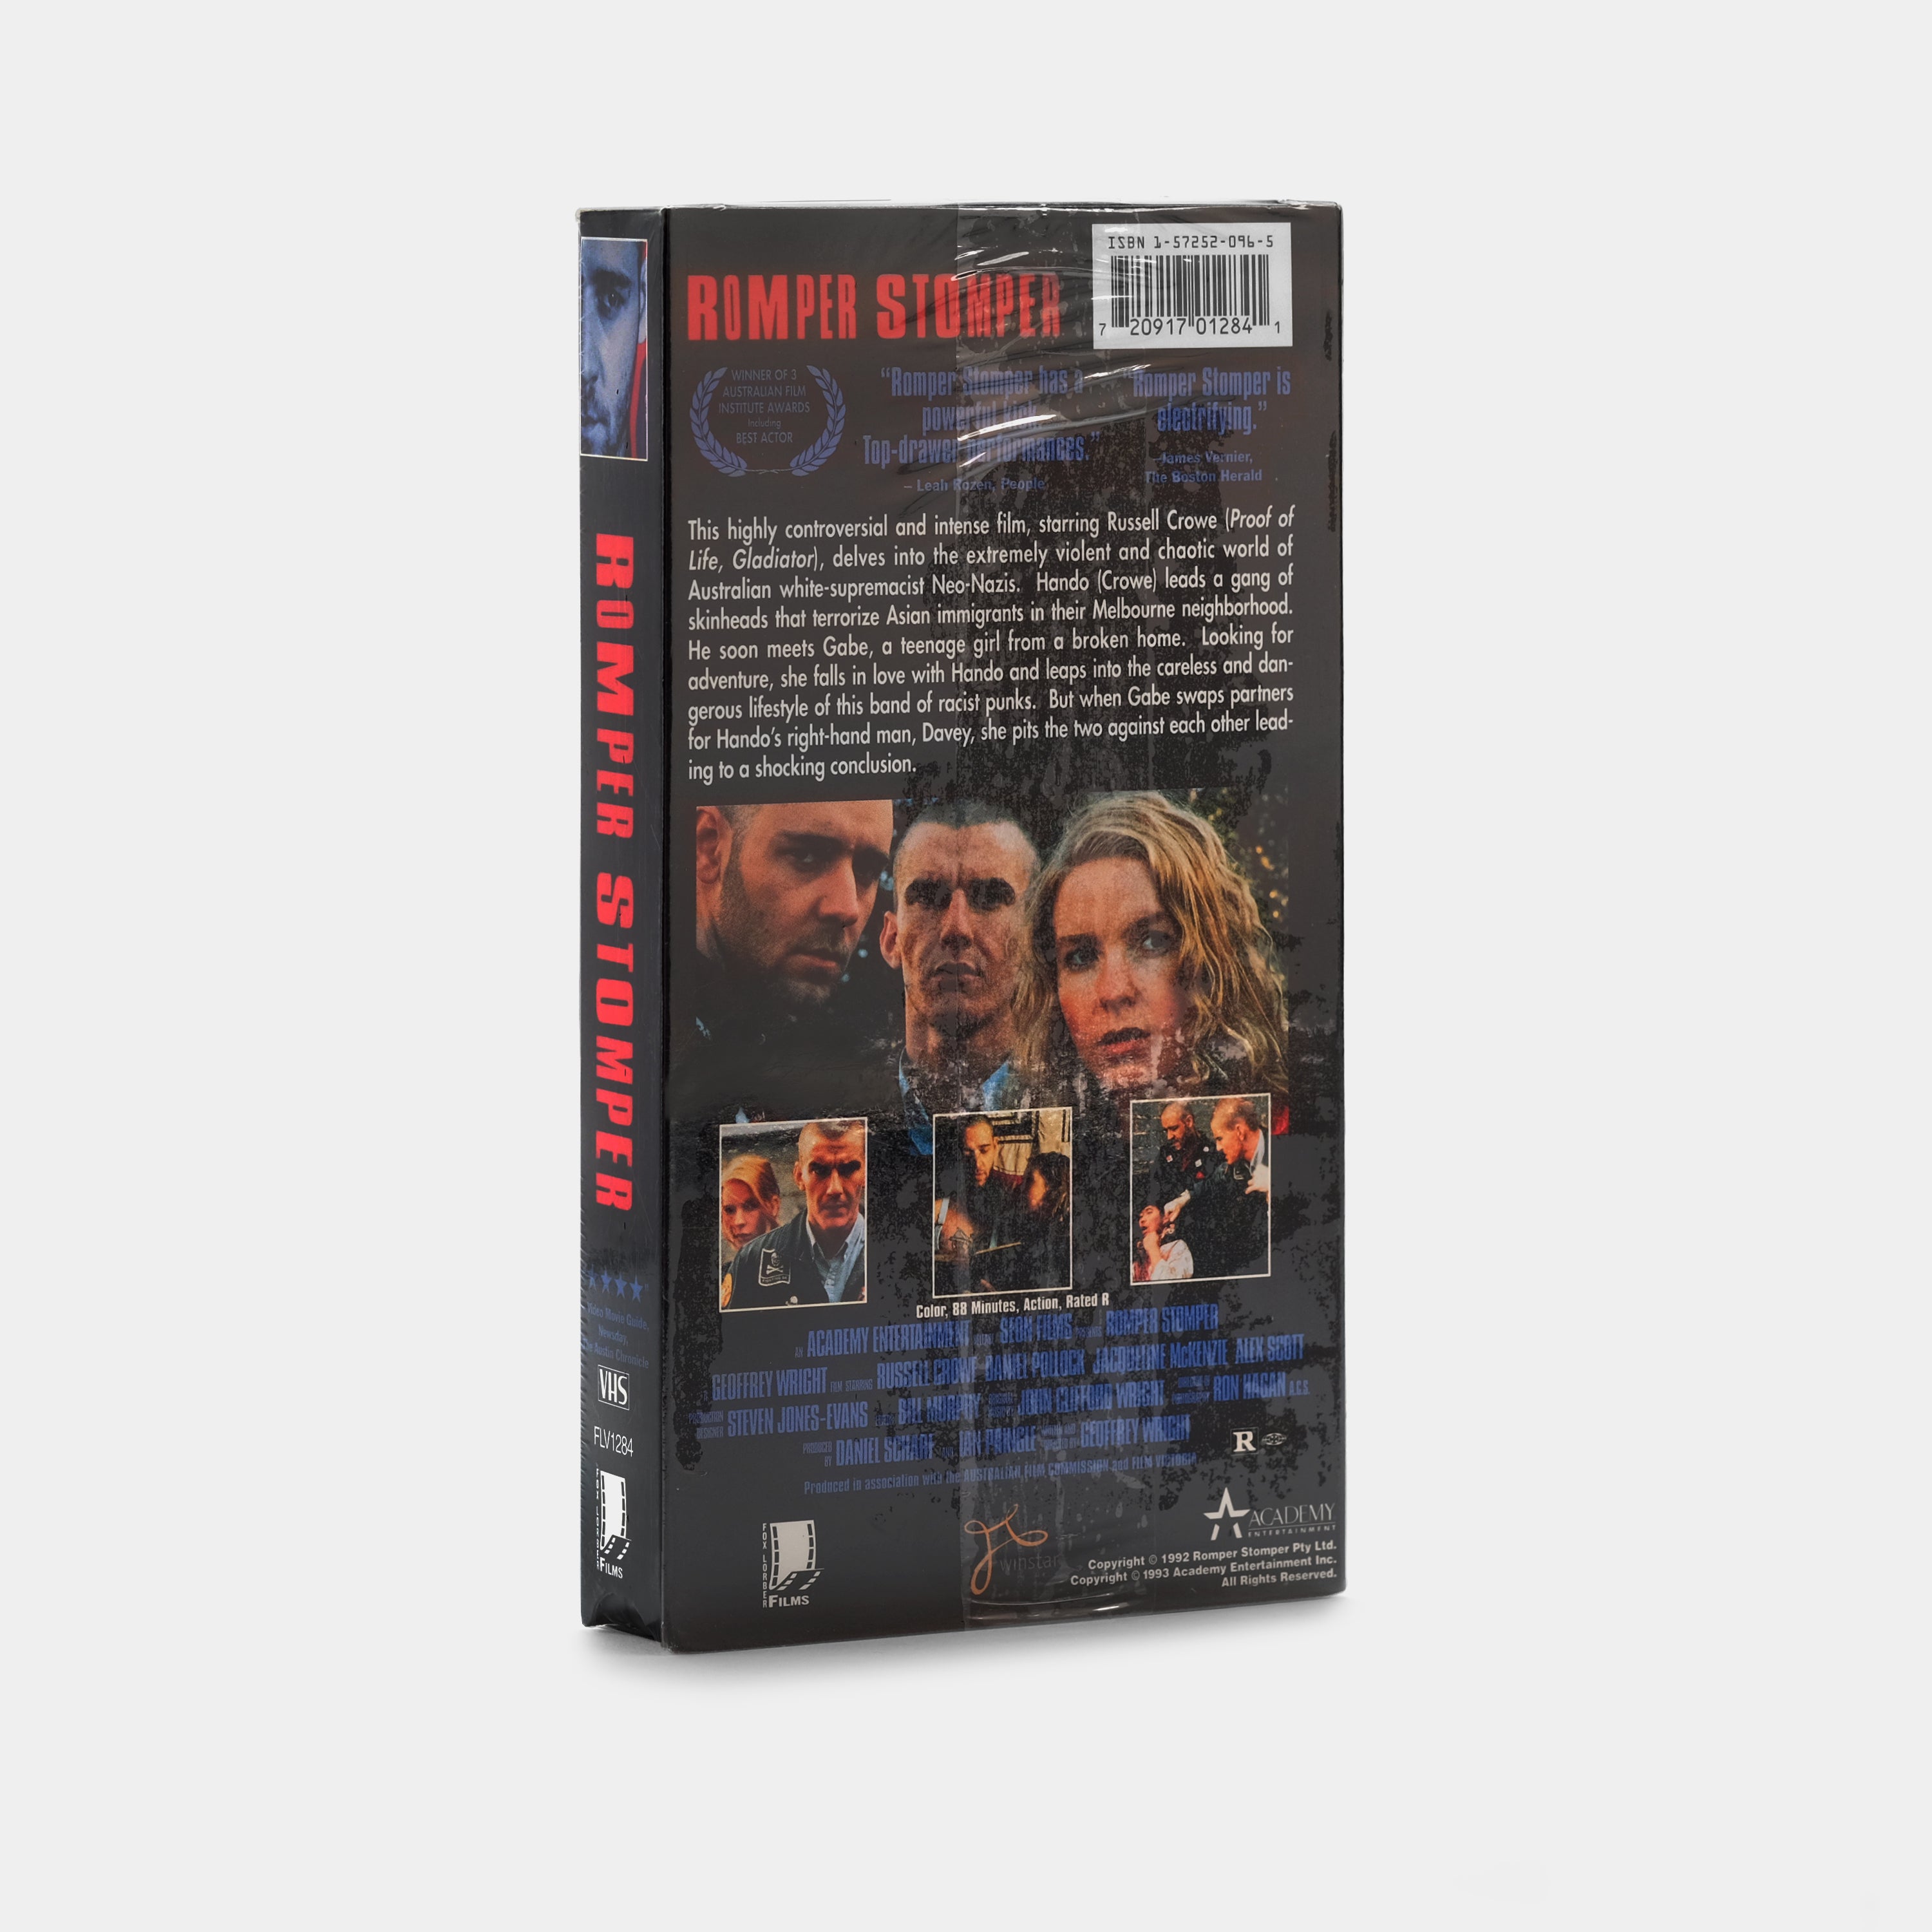 Romper Stomper (Sealed) VHS Tape